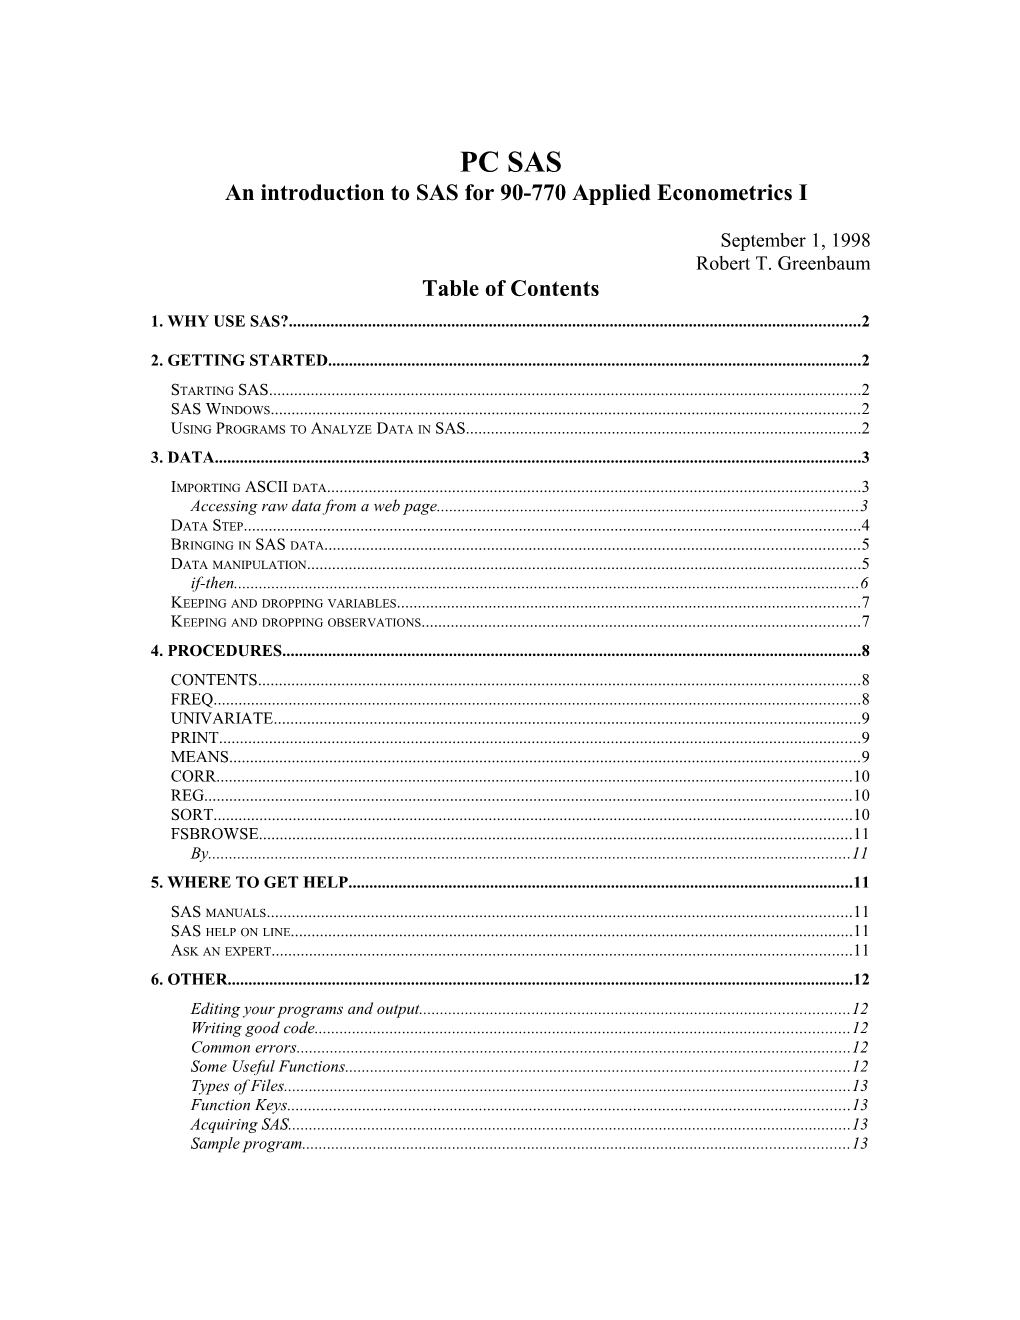 An Introduction to SAS for 90-770 Applied Econometrics I